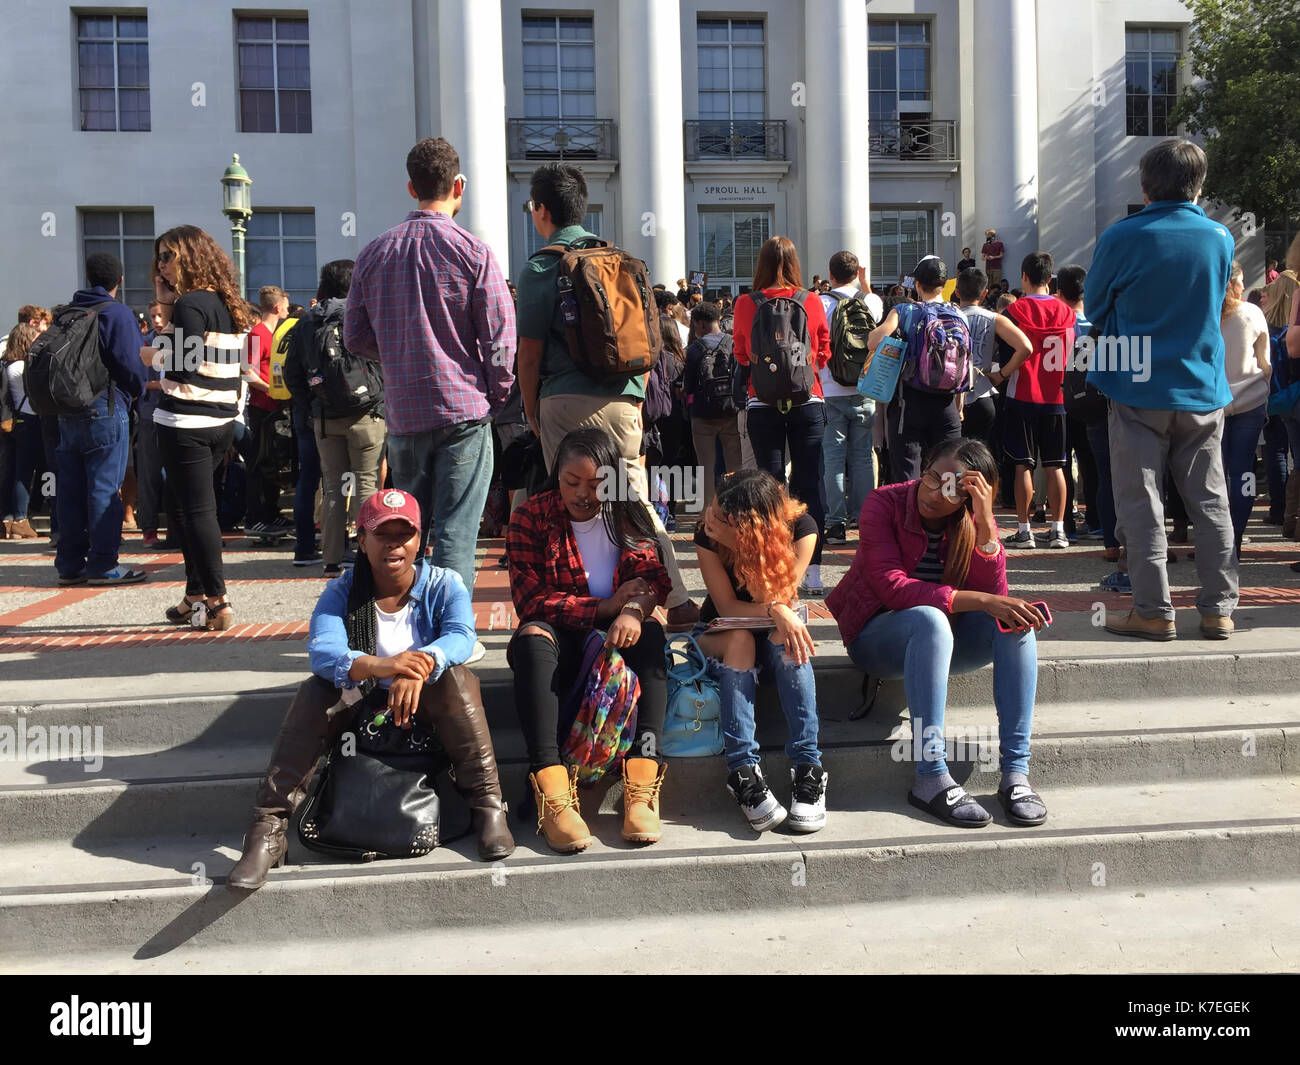 Berkeley High School Schueler protestierten gegen rassistische Bedrohungen an der School Library gefunden. Studenten marschierten friedlich an der UC Berkeley Campus, hier gezeigt. Stockfoto